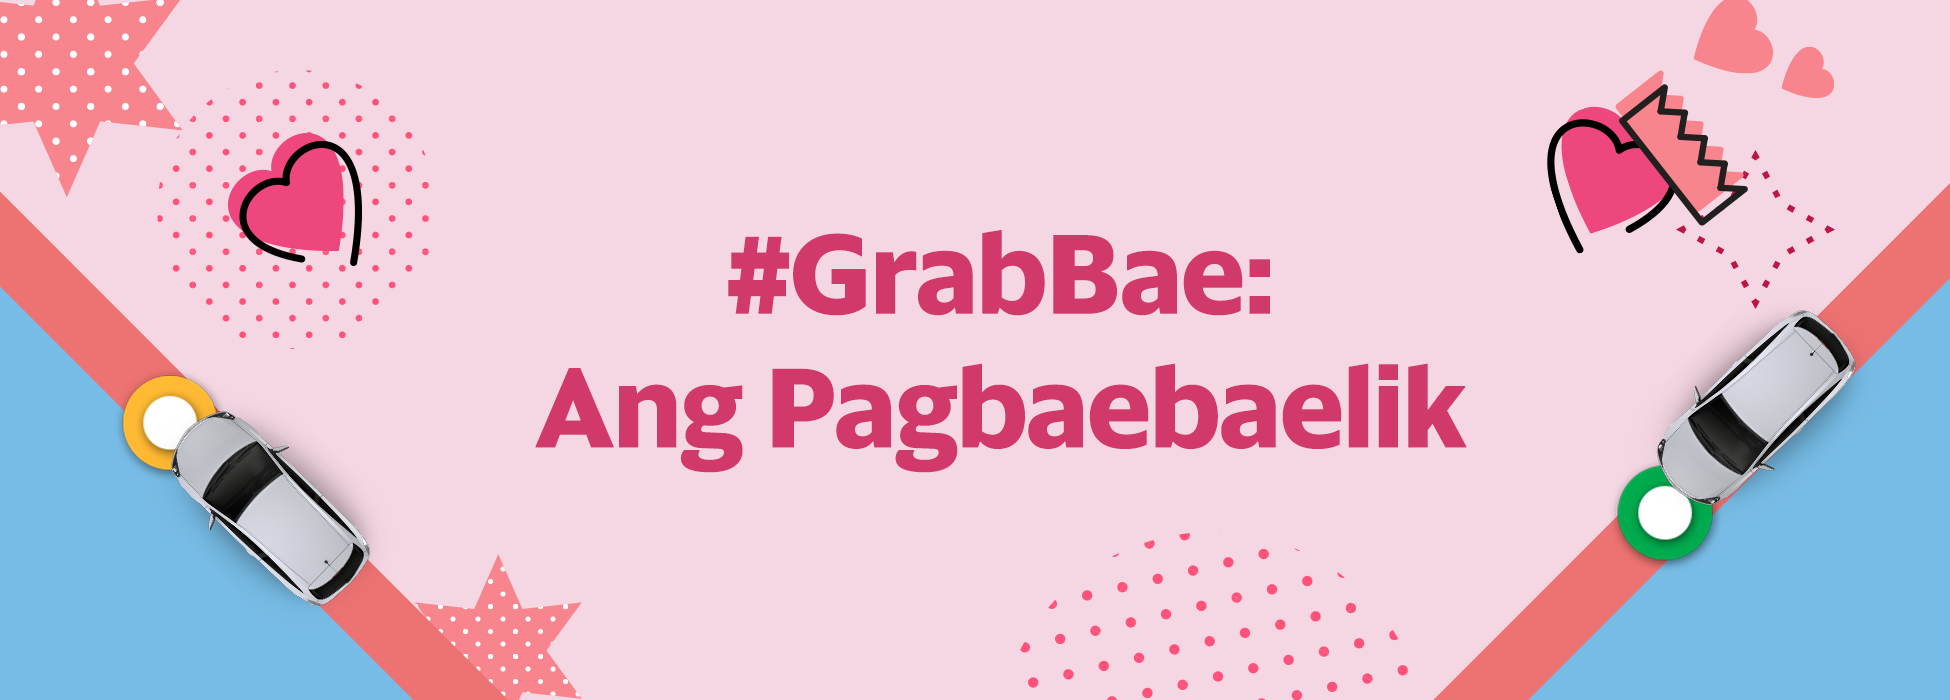 GrabBae_Blog-banner